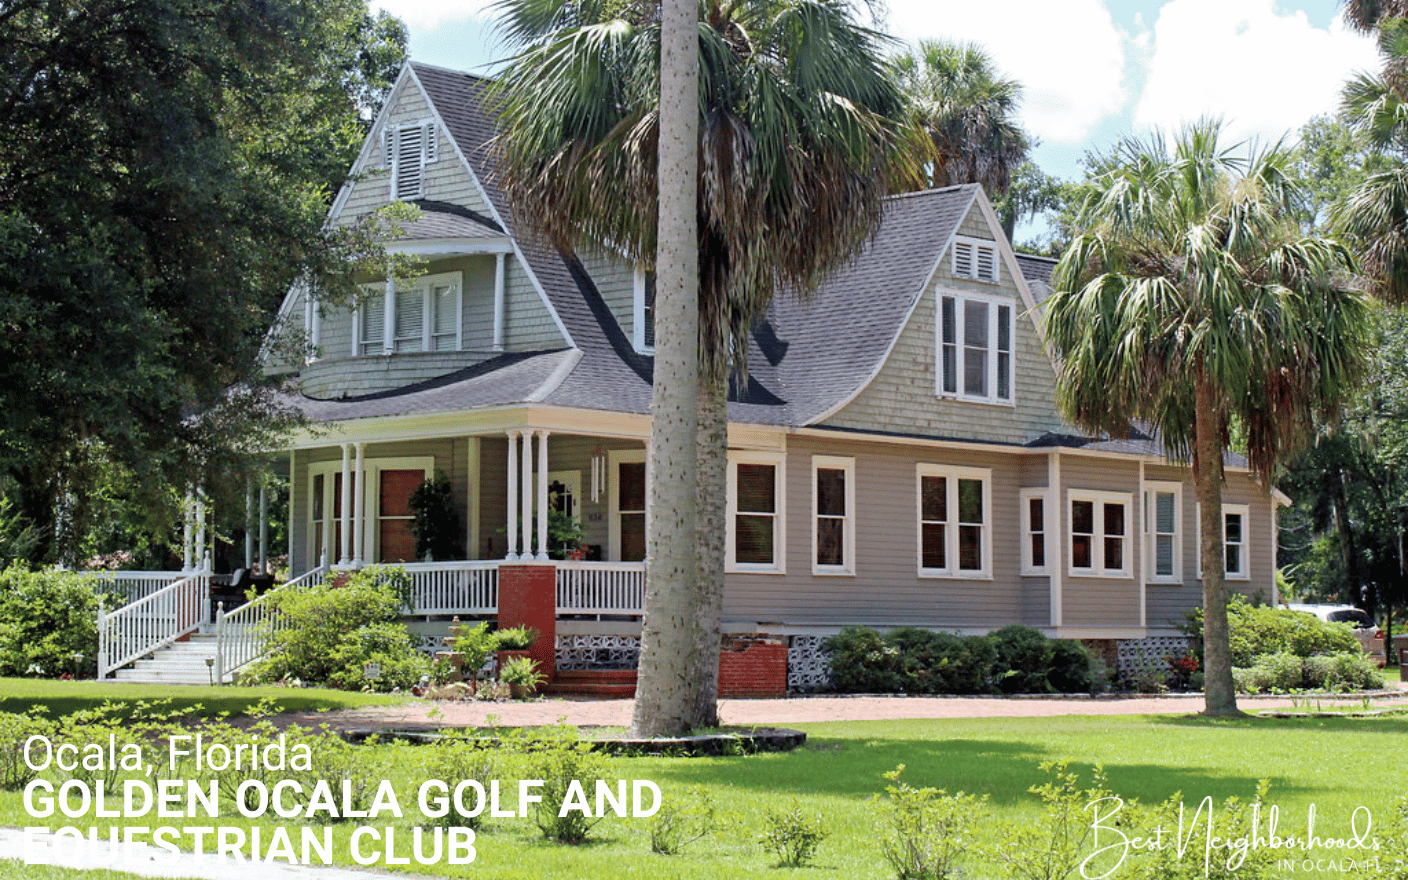 Best Neighborhoods in Ocala - Ocala Florida GOLDEN OCALA GOLF AND EQUESTRIAN CLUB 1 1 edited